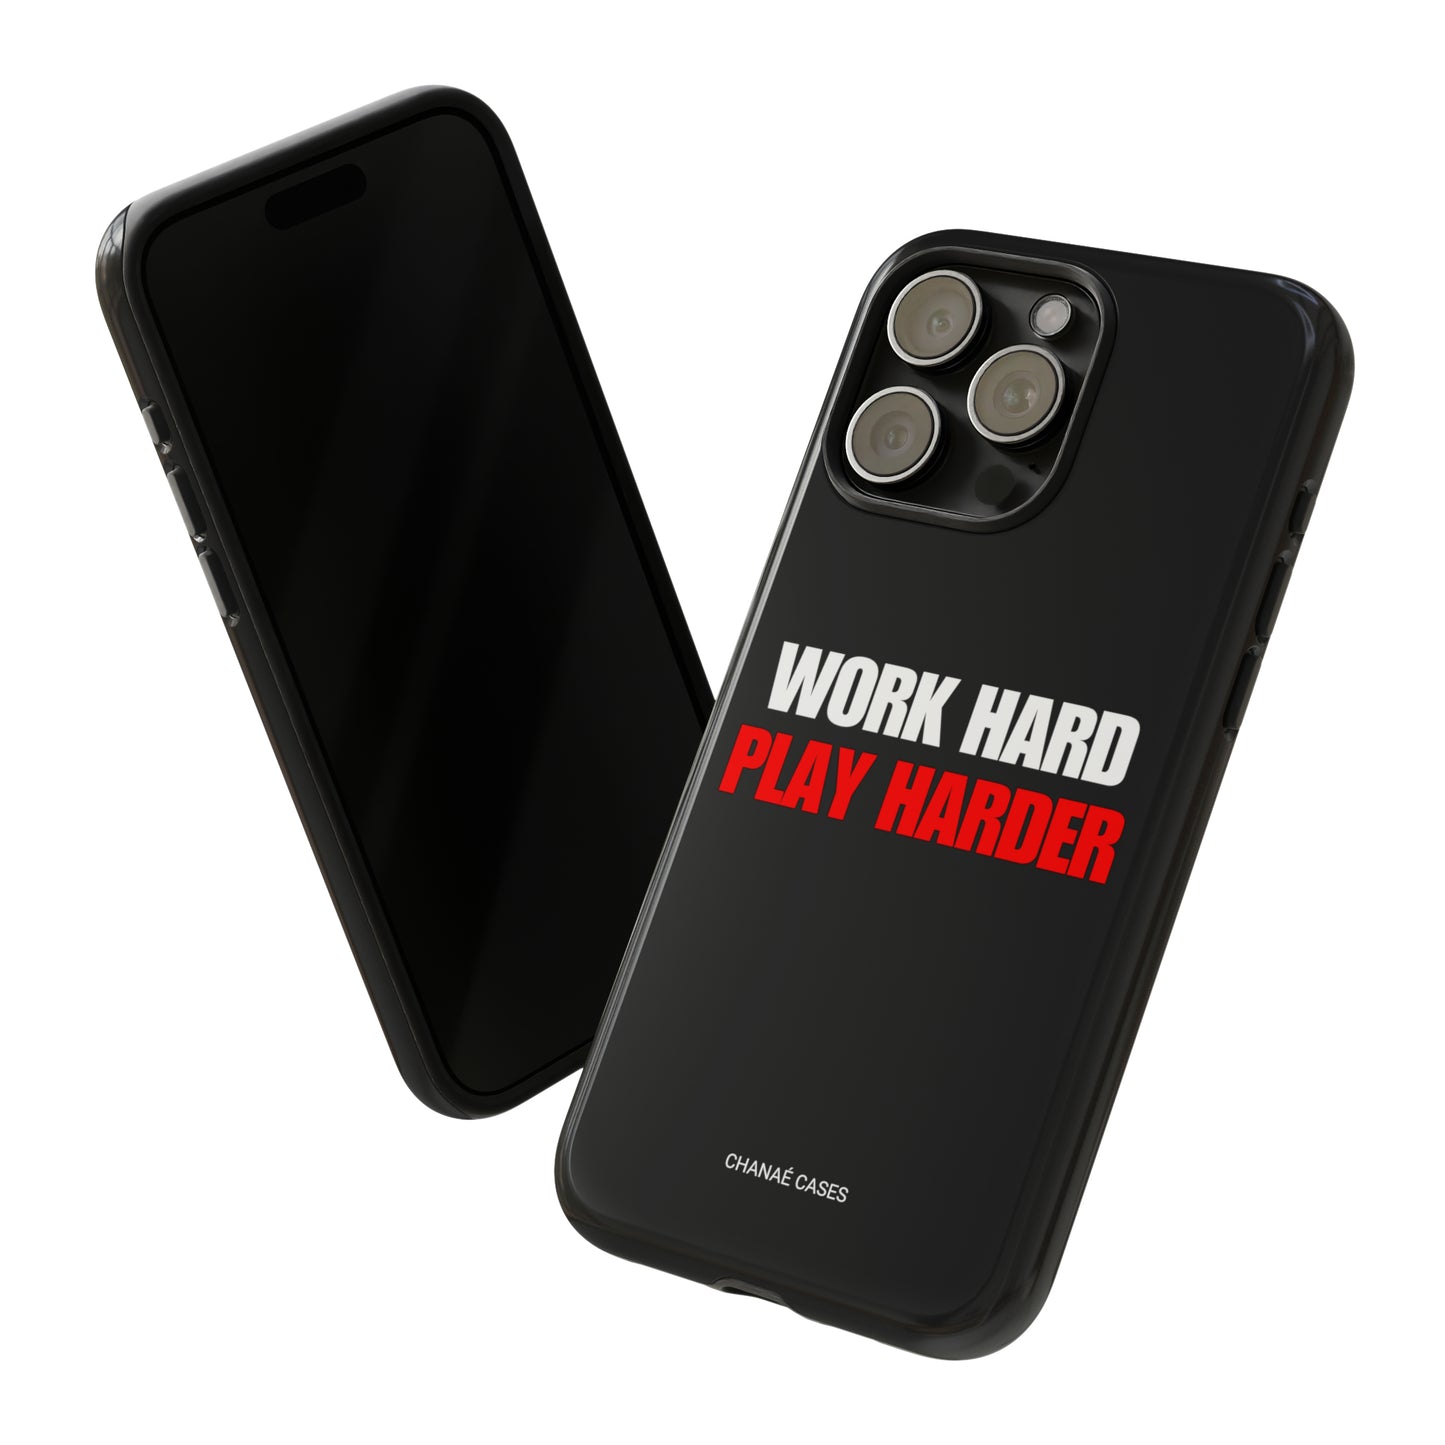 Work Hard Play Harder iPhone "Tough" Case (Black)